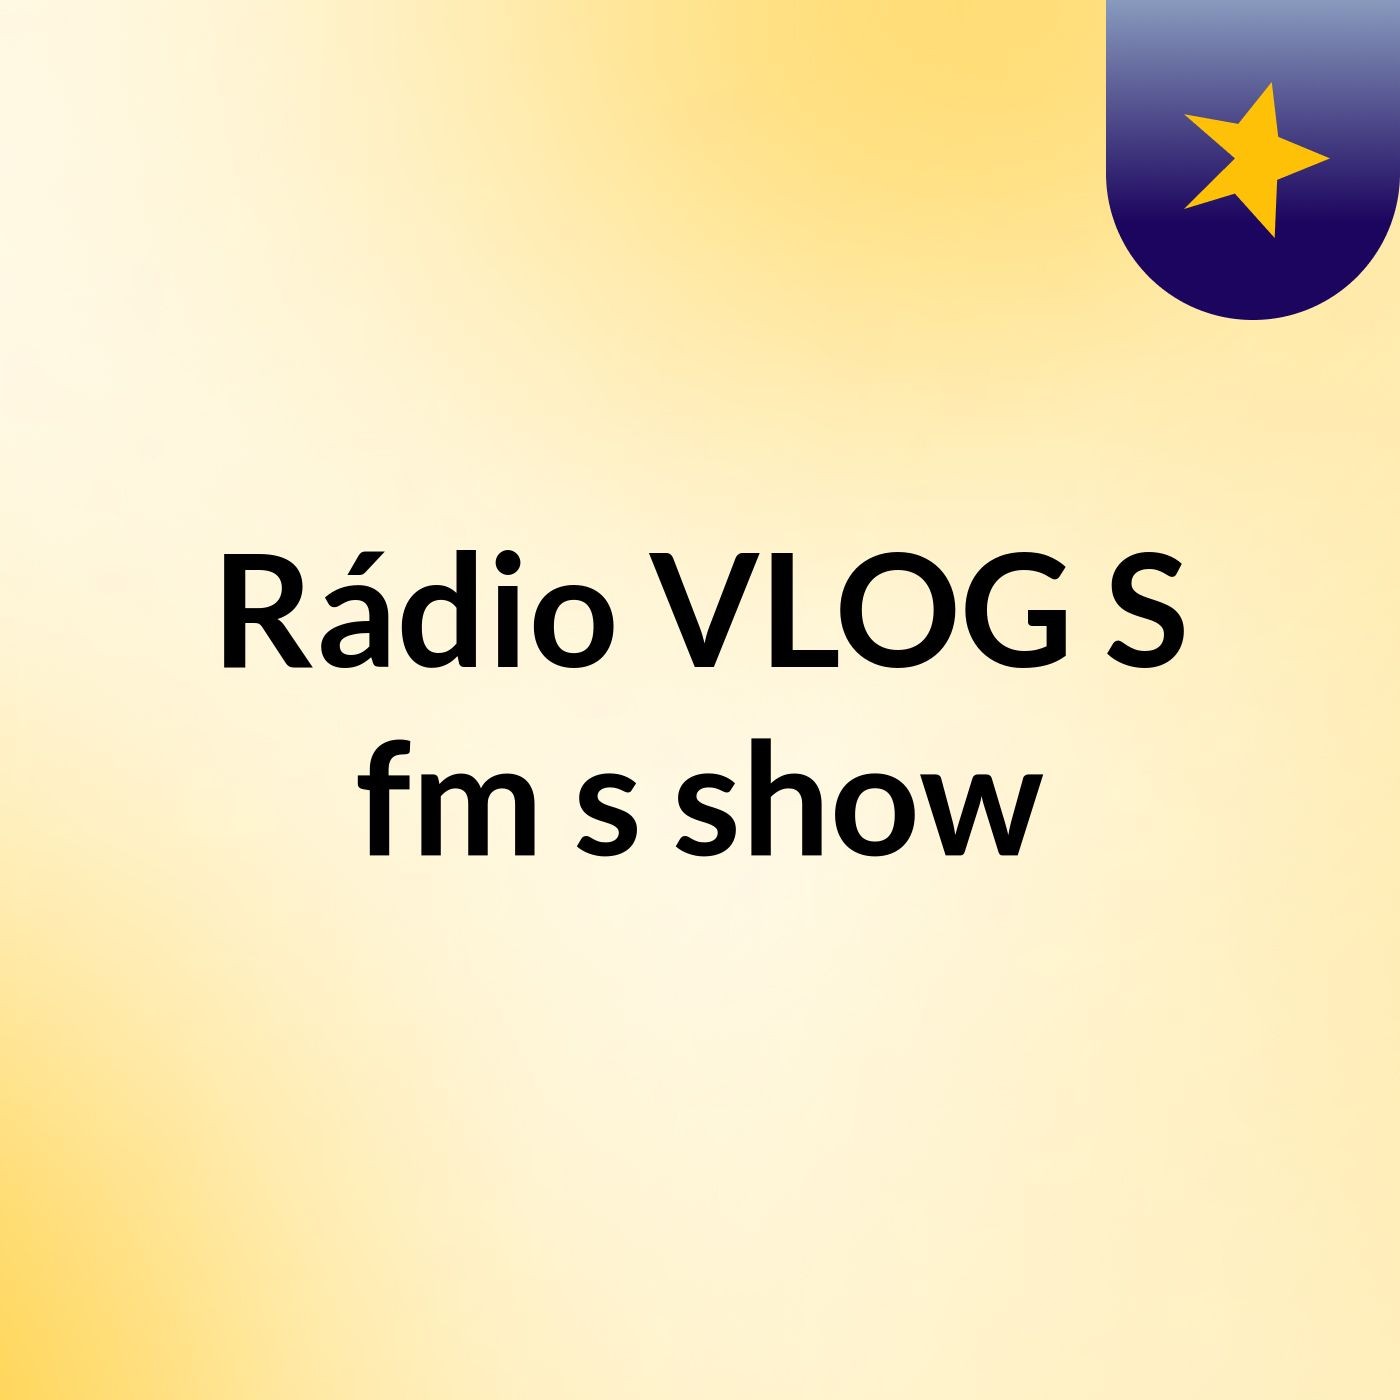 Rádio VLOG'S fm's show